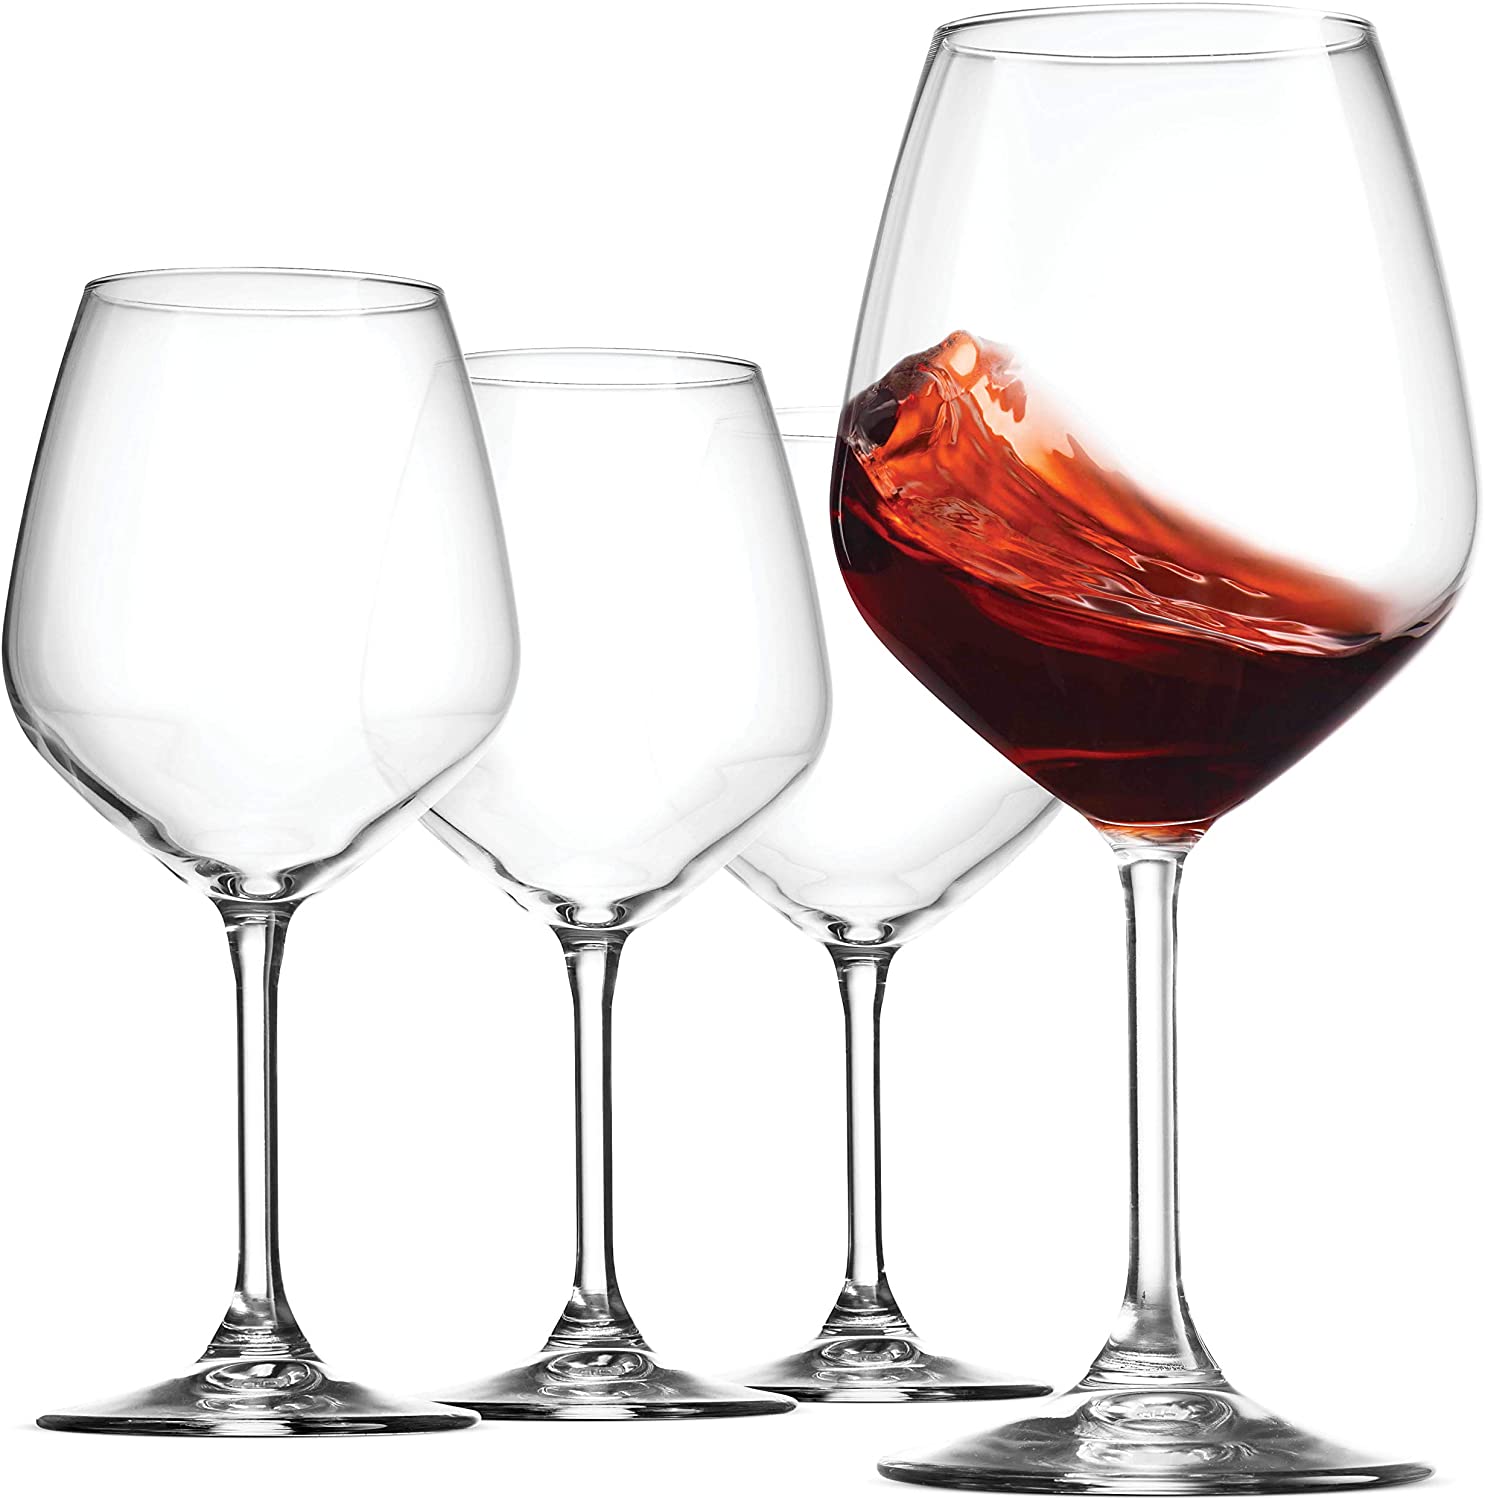 https://www.dontwasteyourmoney.com/wp-content/uploads/2019/08/bormioli-rocco-red-wine-glasses-18-oz-set-of-4.jpg